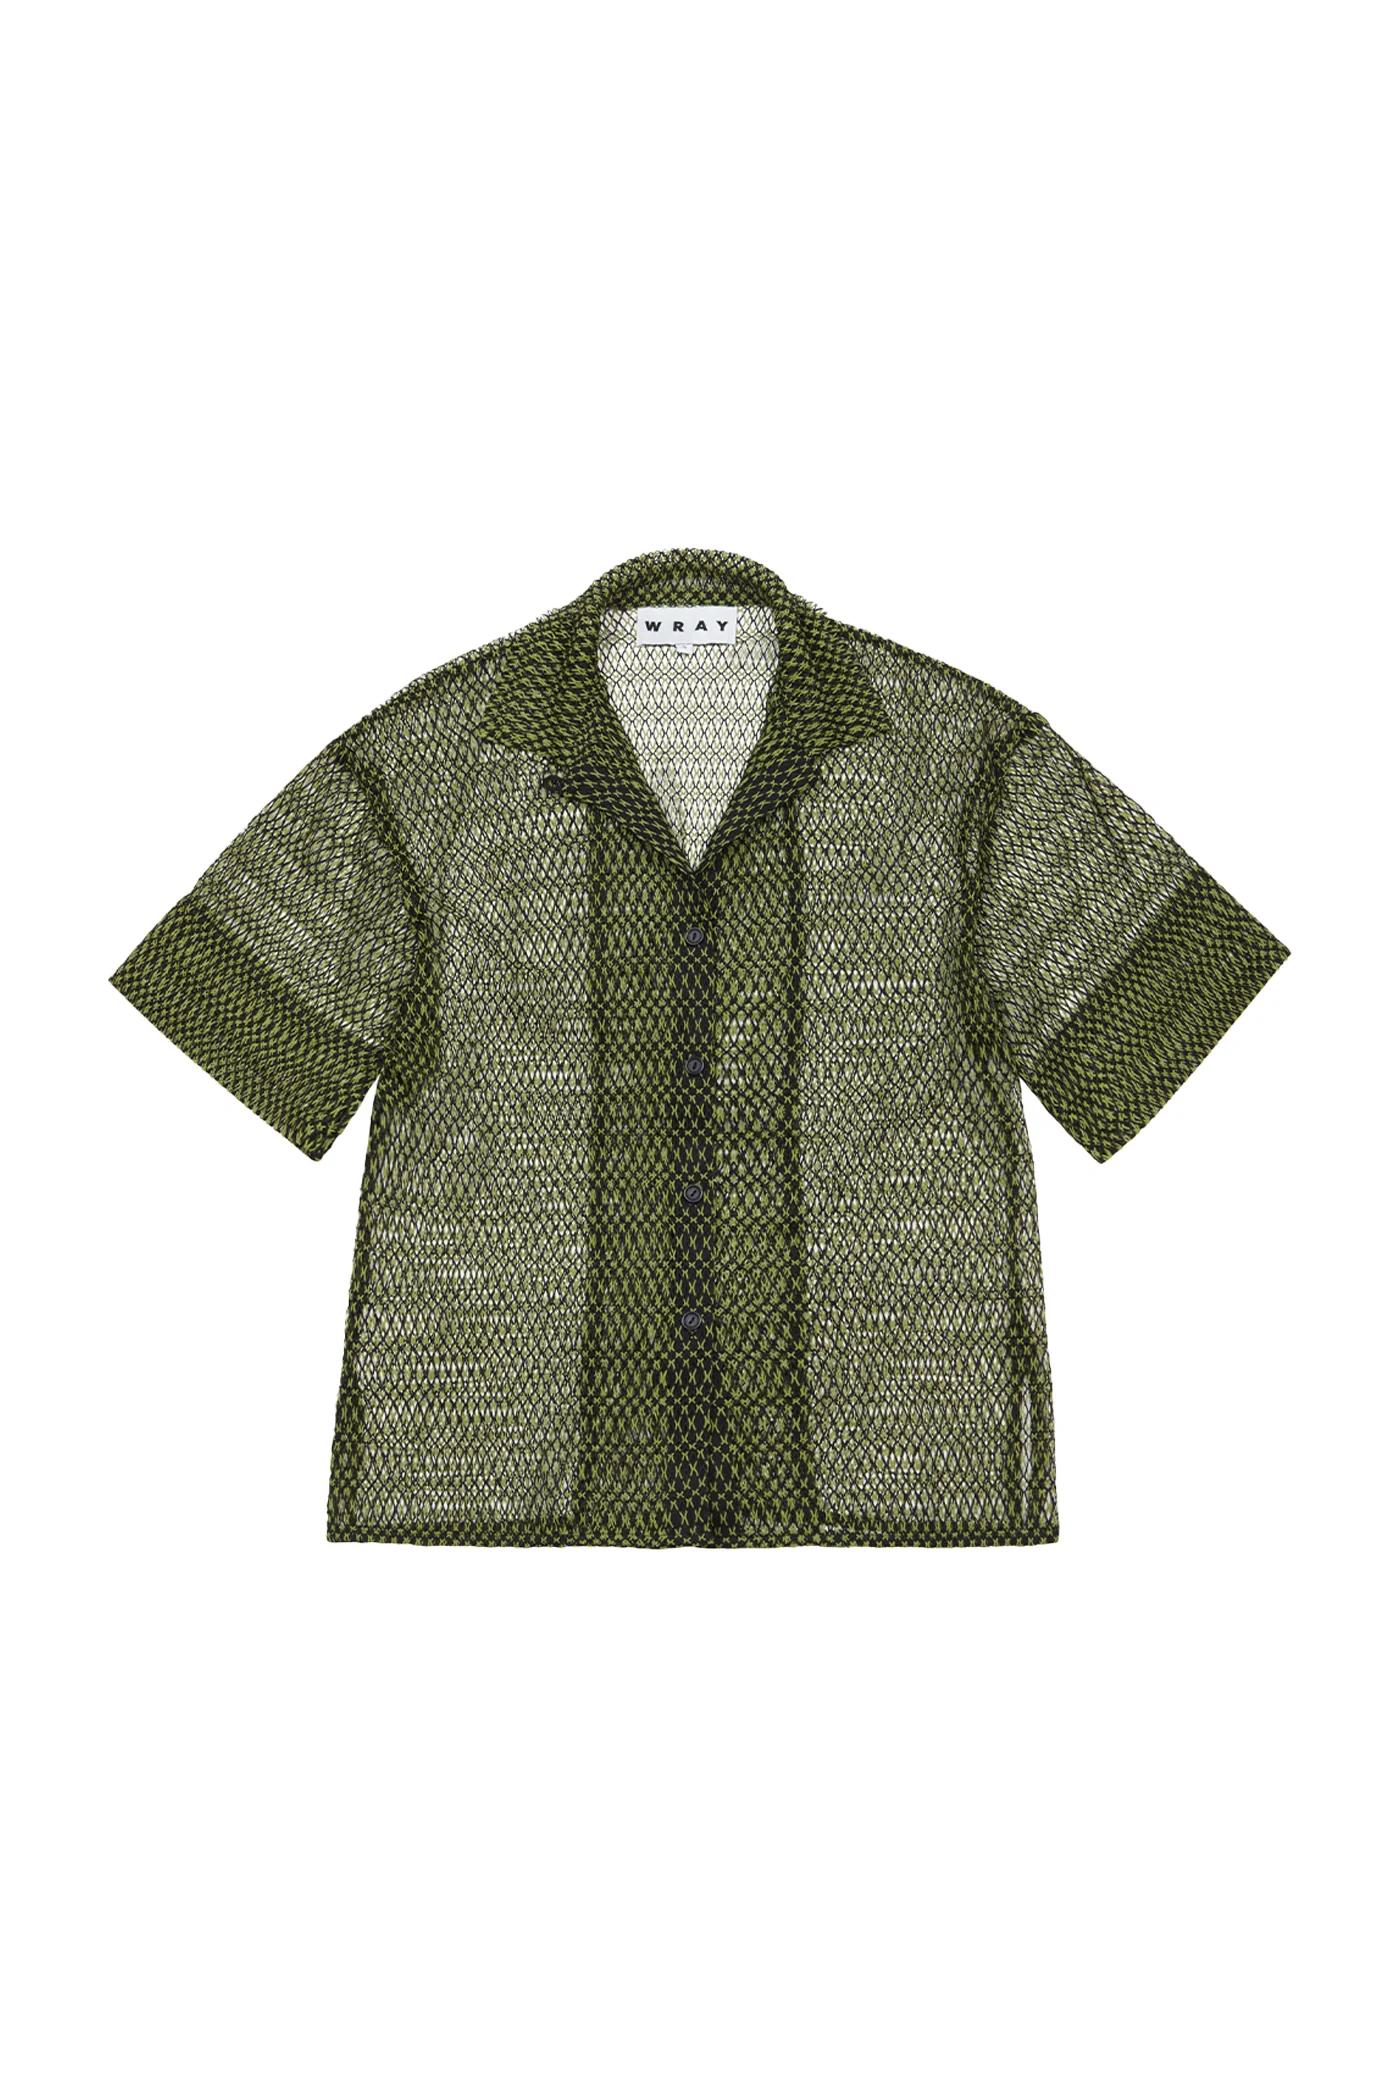 Product Image for Bowen Shirt, Multi Mesh